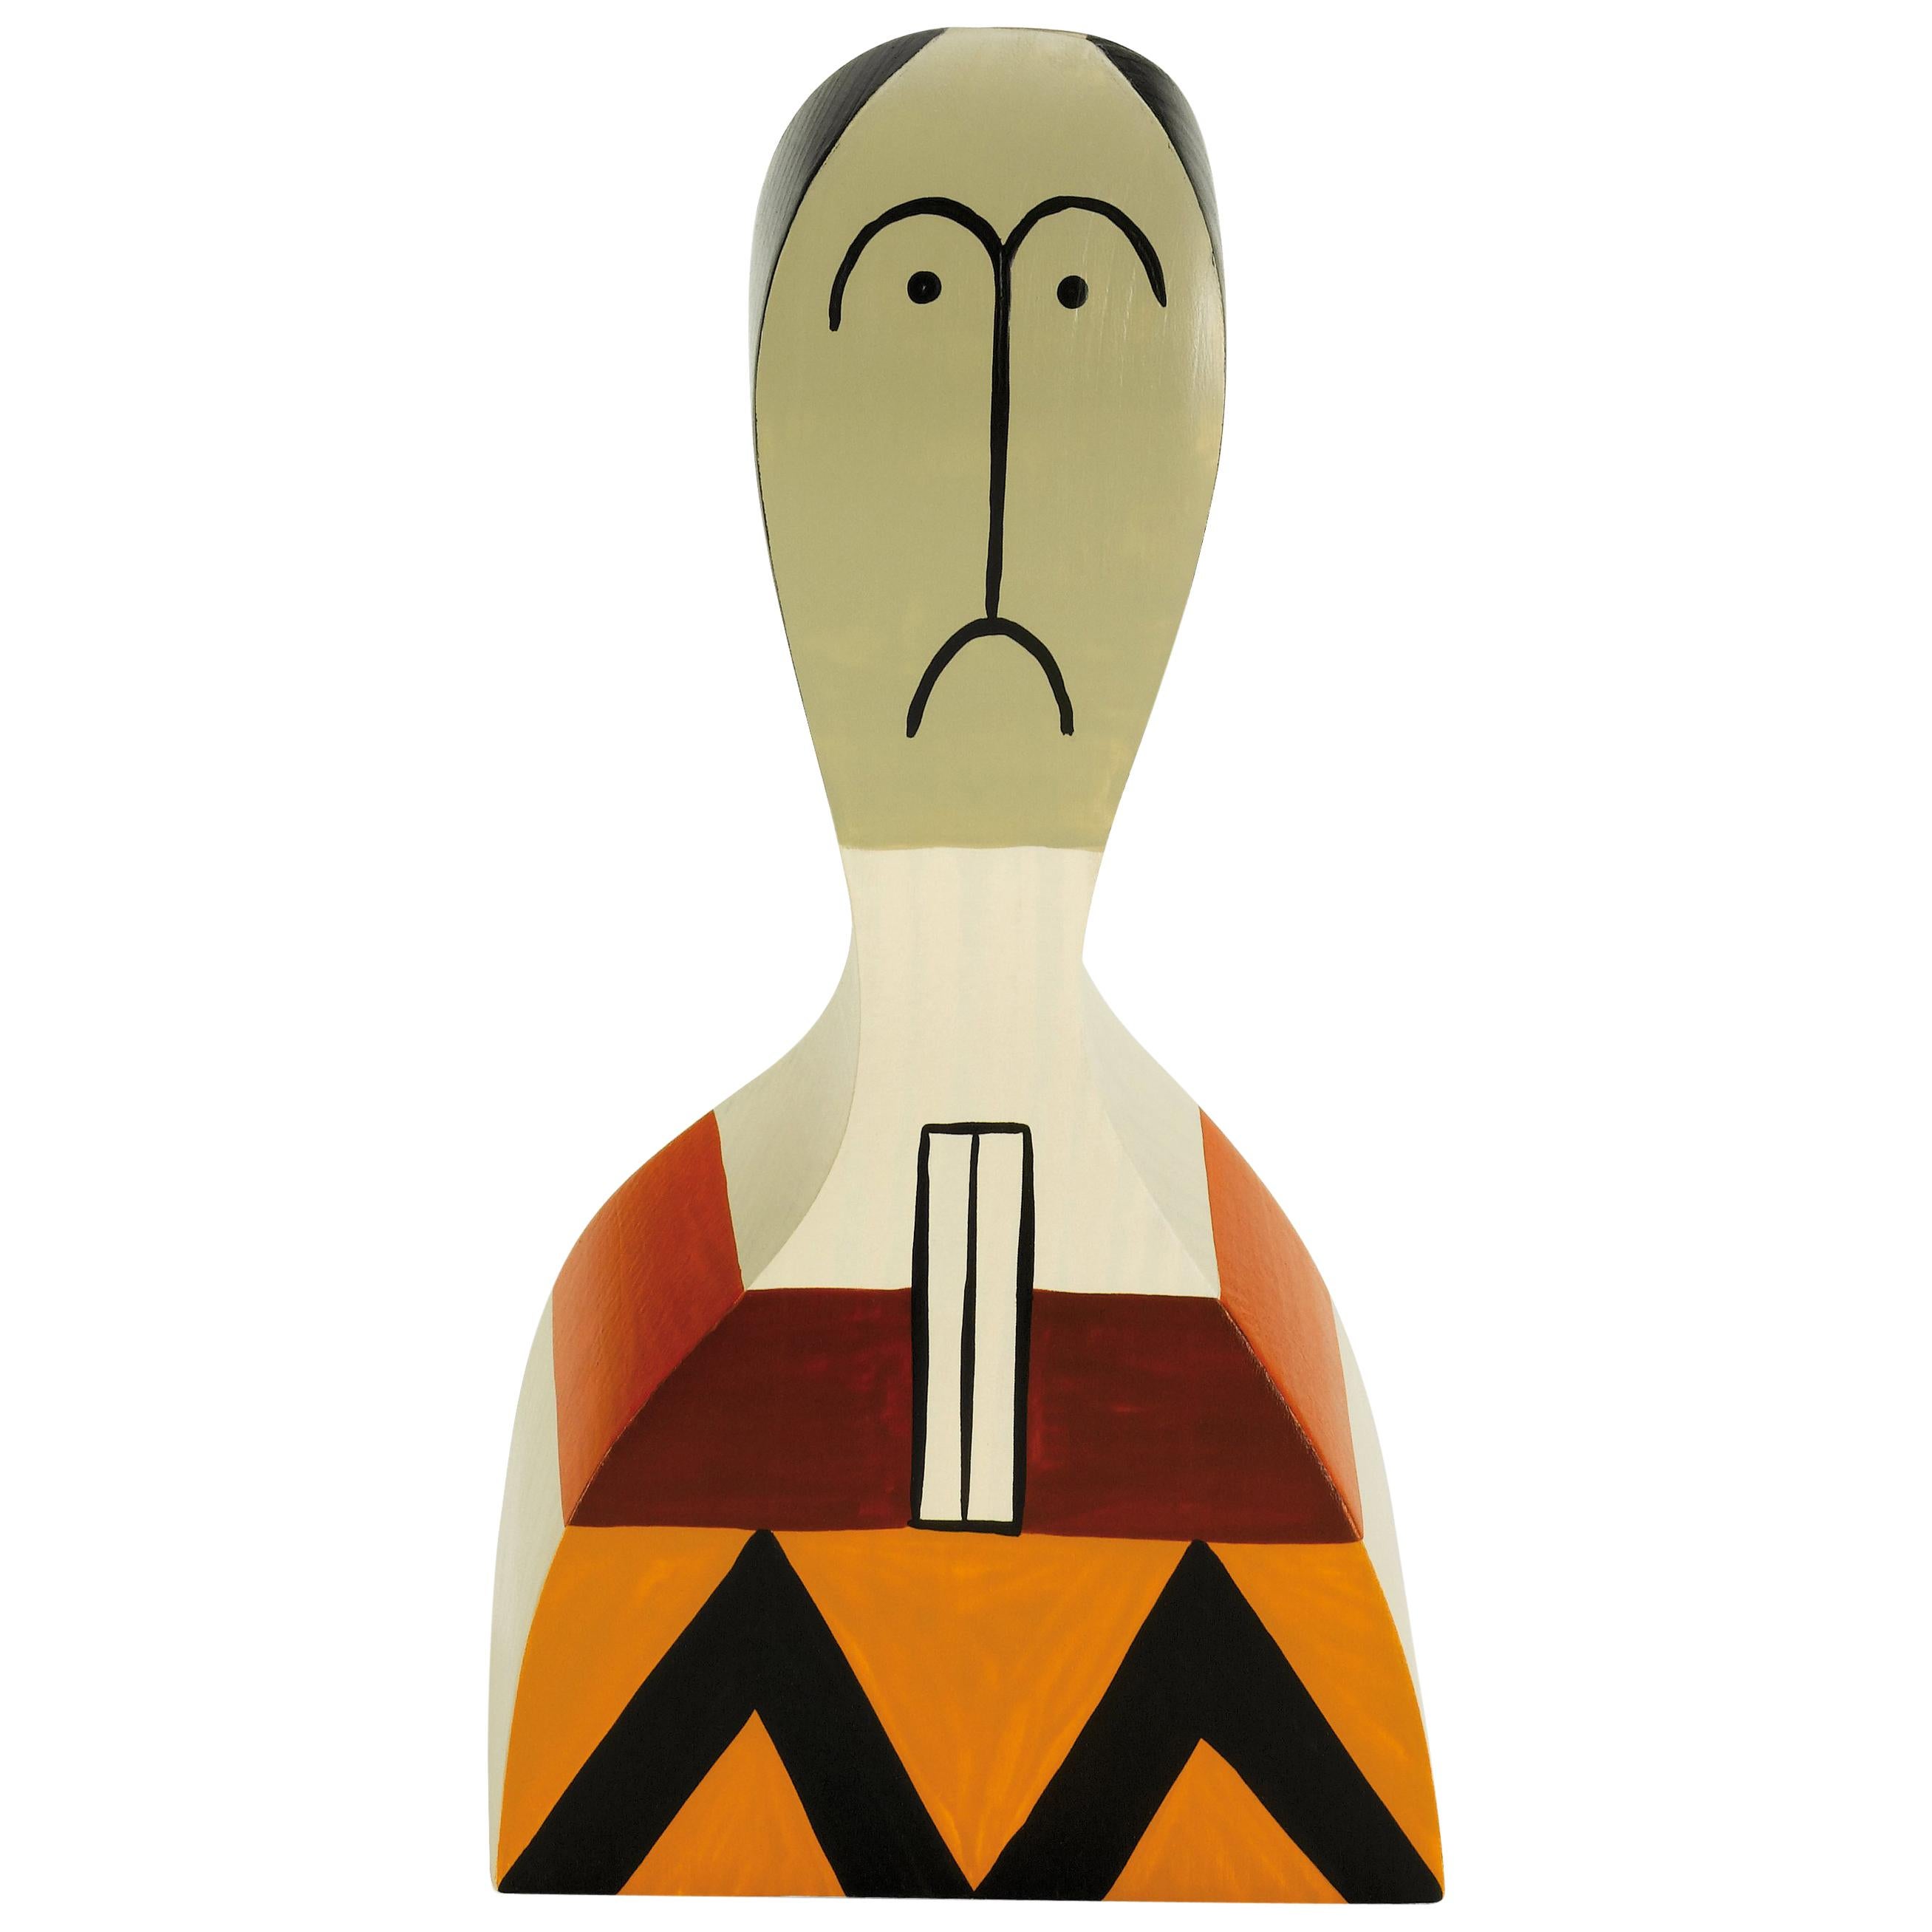 Vitra Wooden Doll No. 17 by Alexander Girard im Angebot